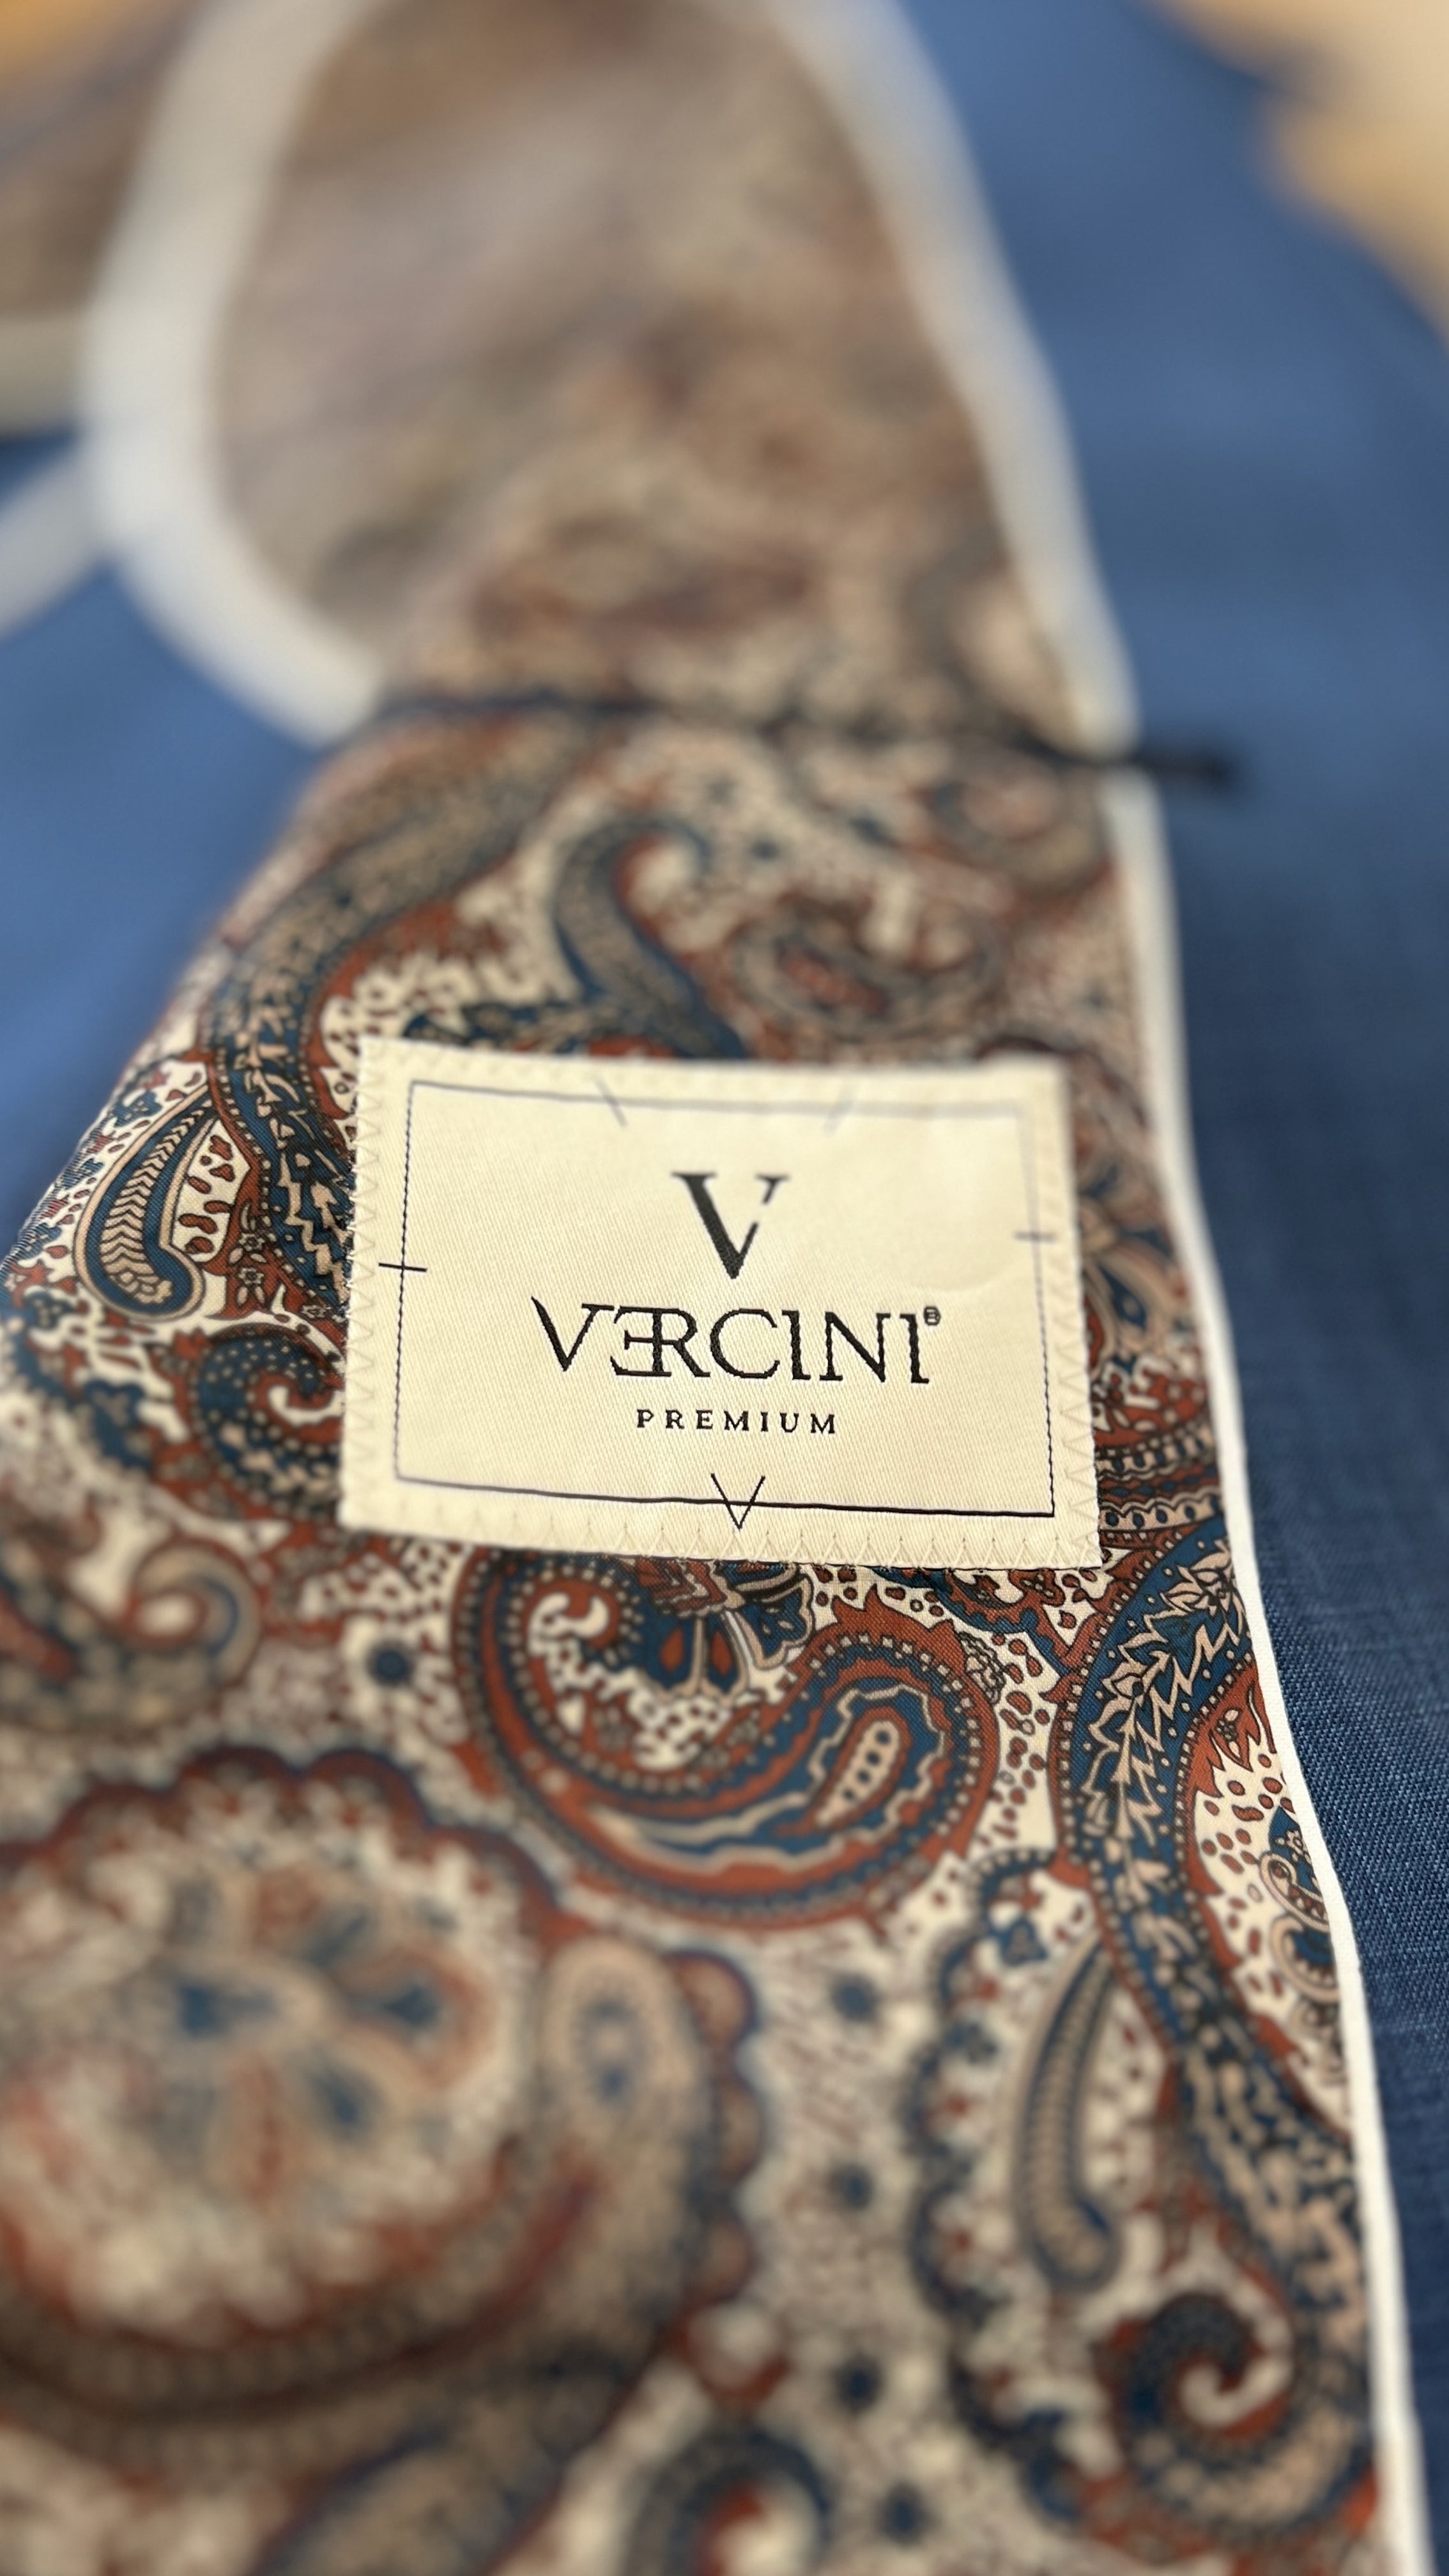 Vercini Men's Slim Fit Business Suit